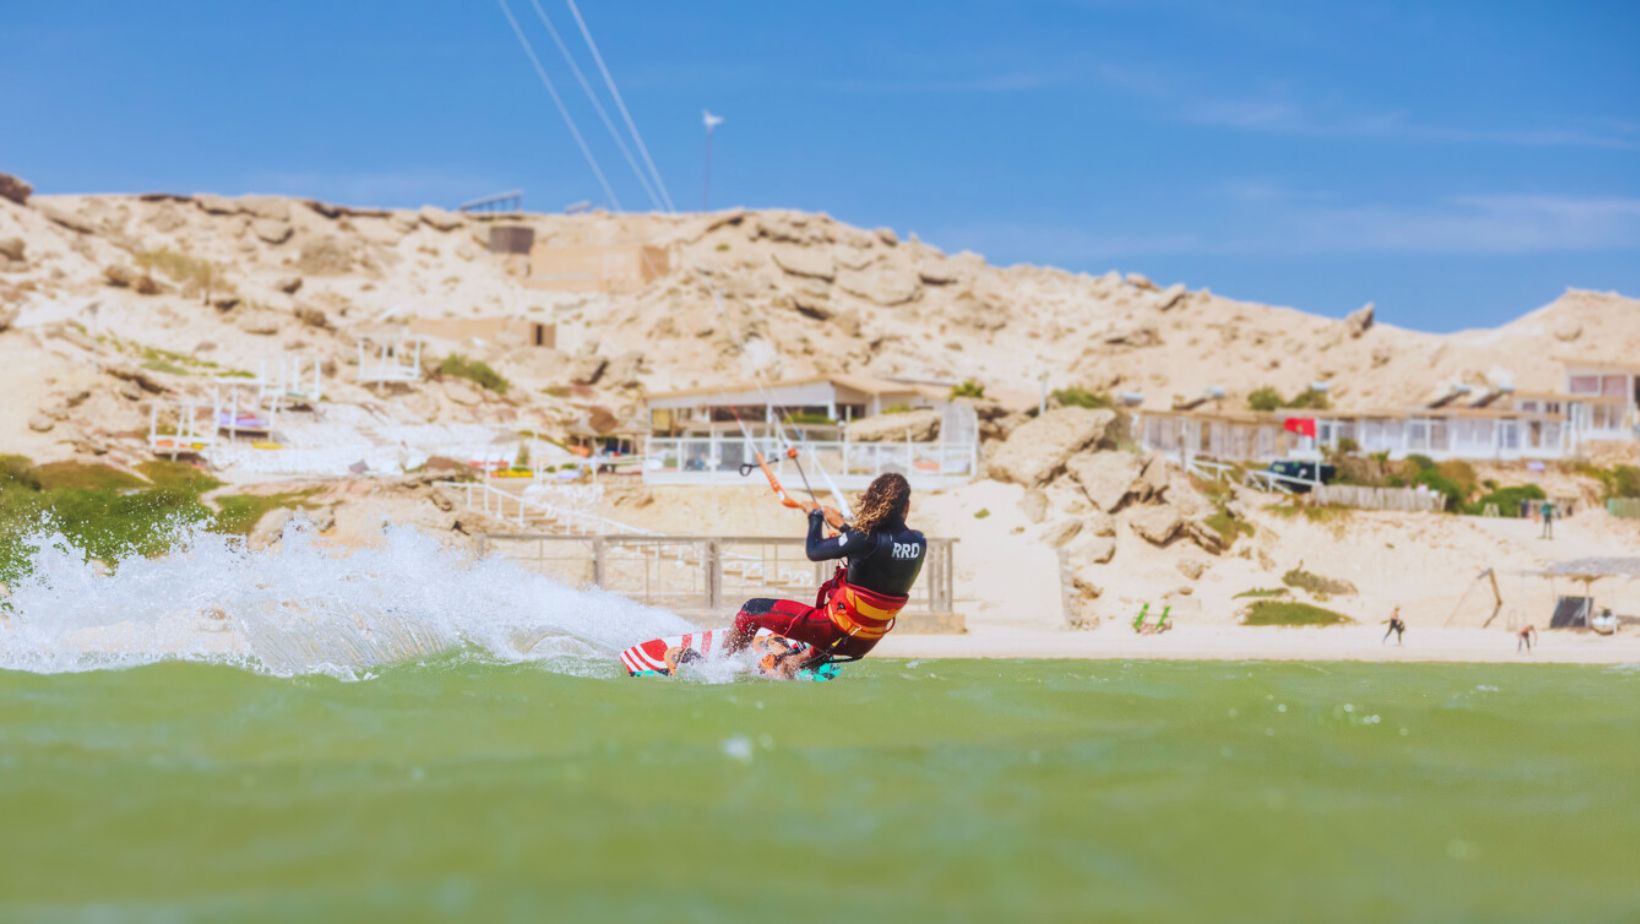 Kitesurfing in Dakhla, Morocco